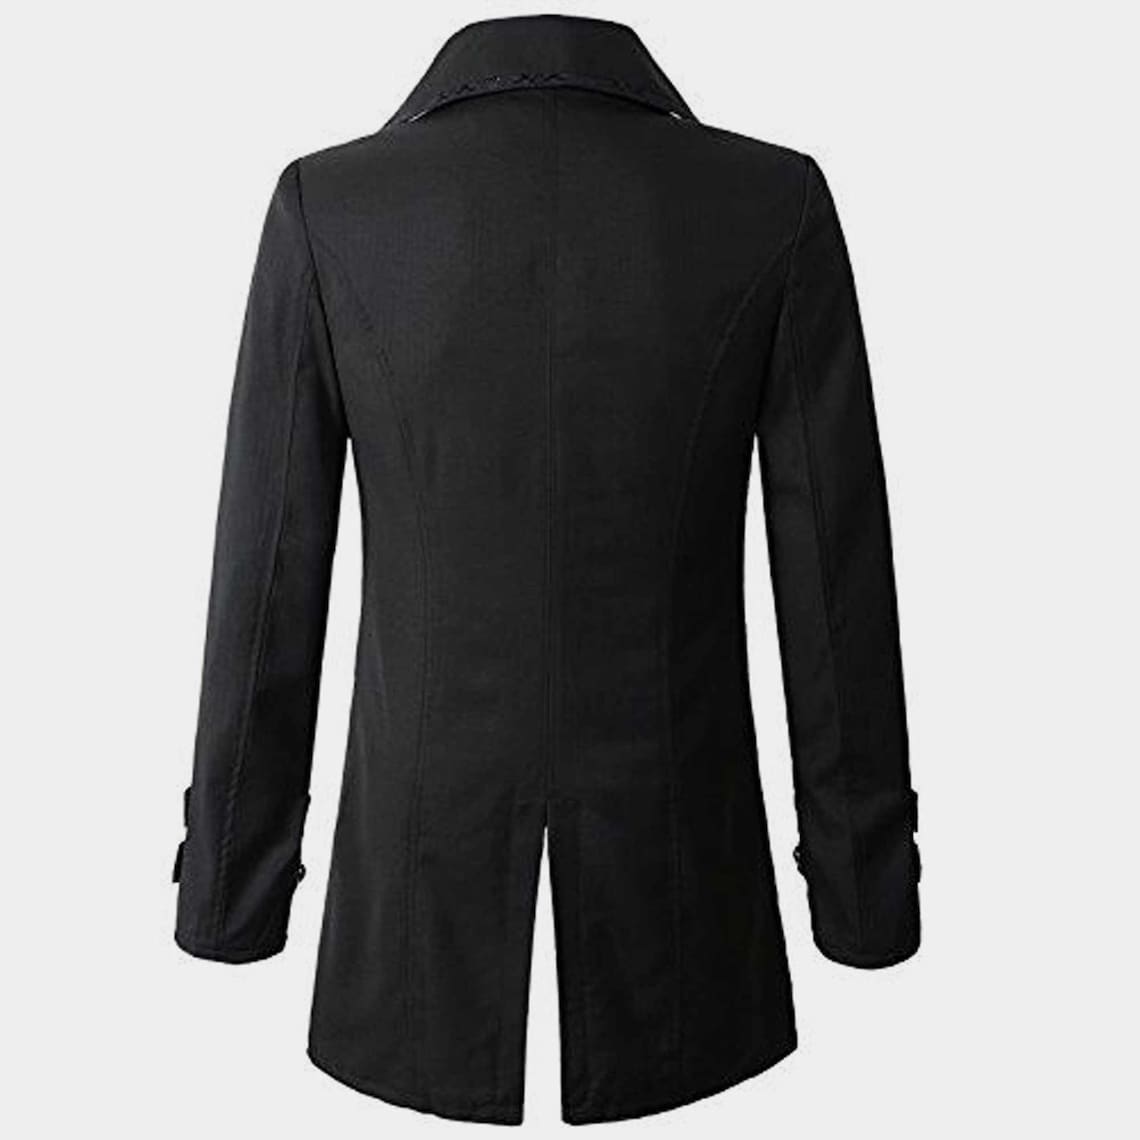 Mens Gothic Steampunk Victorian Tailcoat Jacket Black Gothic - Etsy